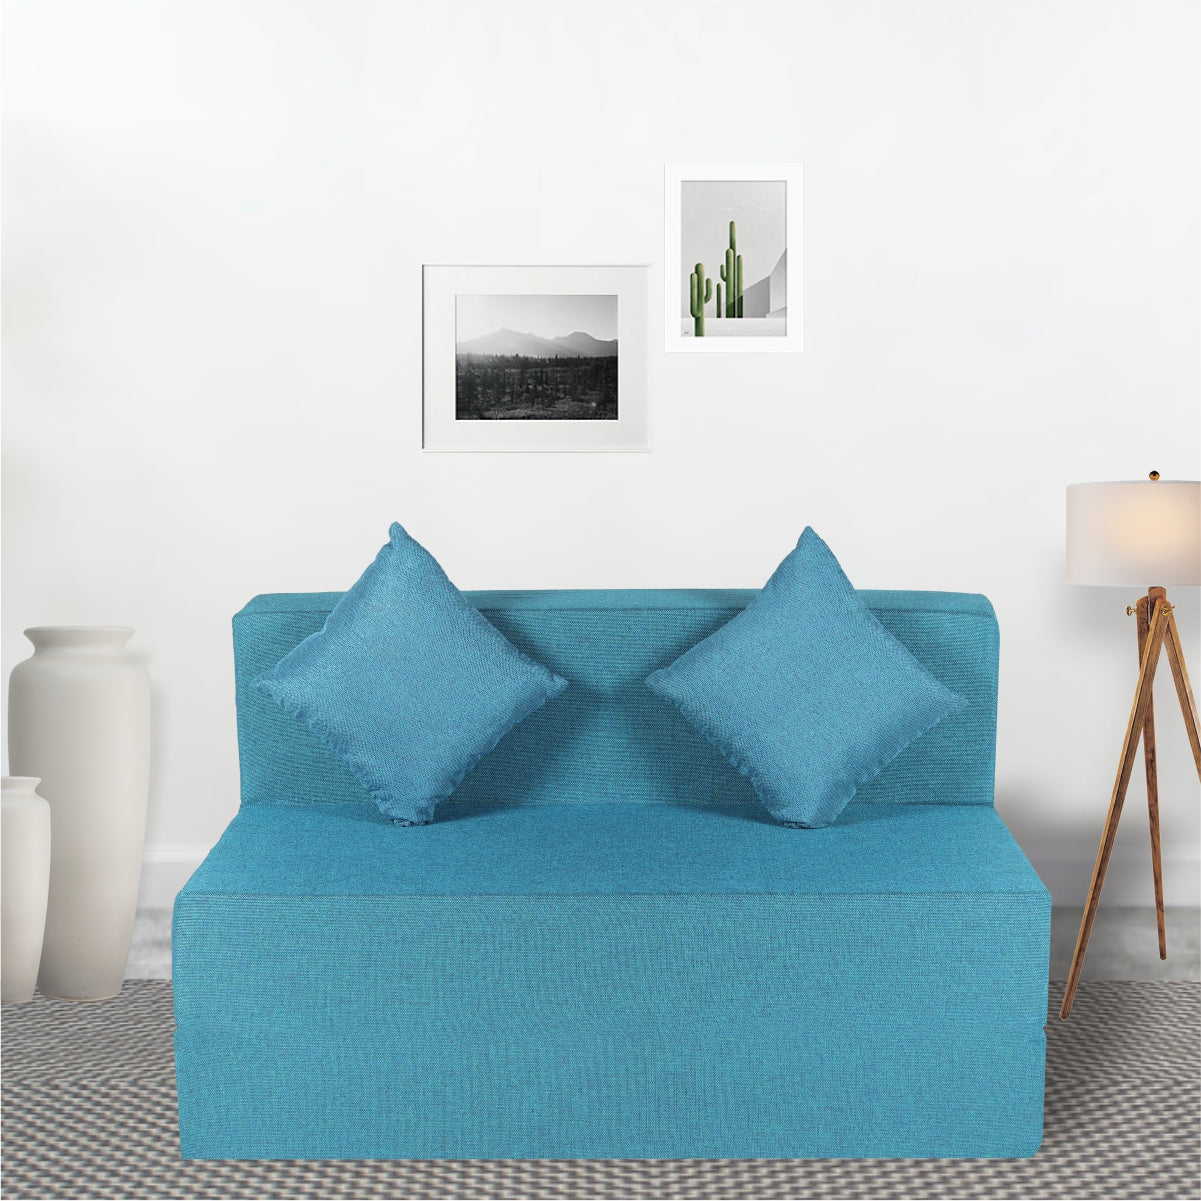 Cover of Blue Jute Fabric 6'X4' Rejoice Sofa cum Bed